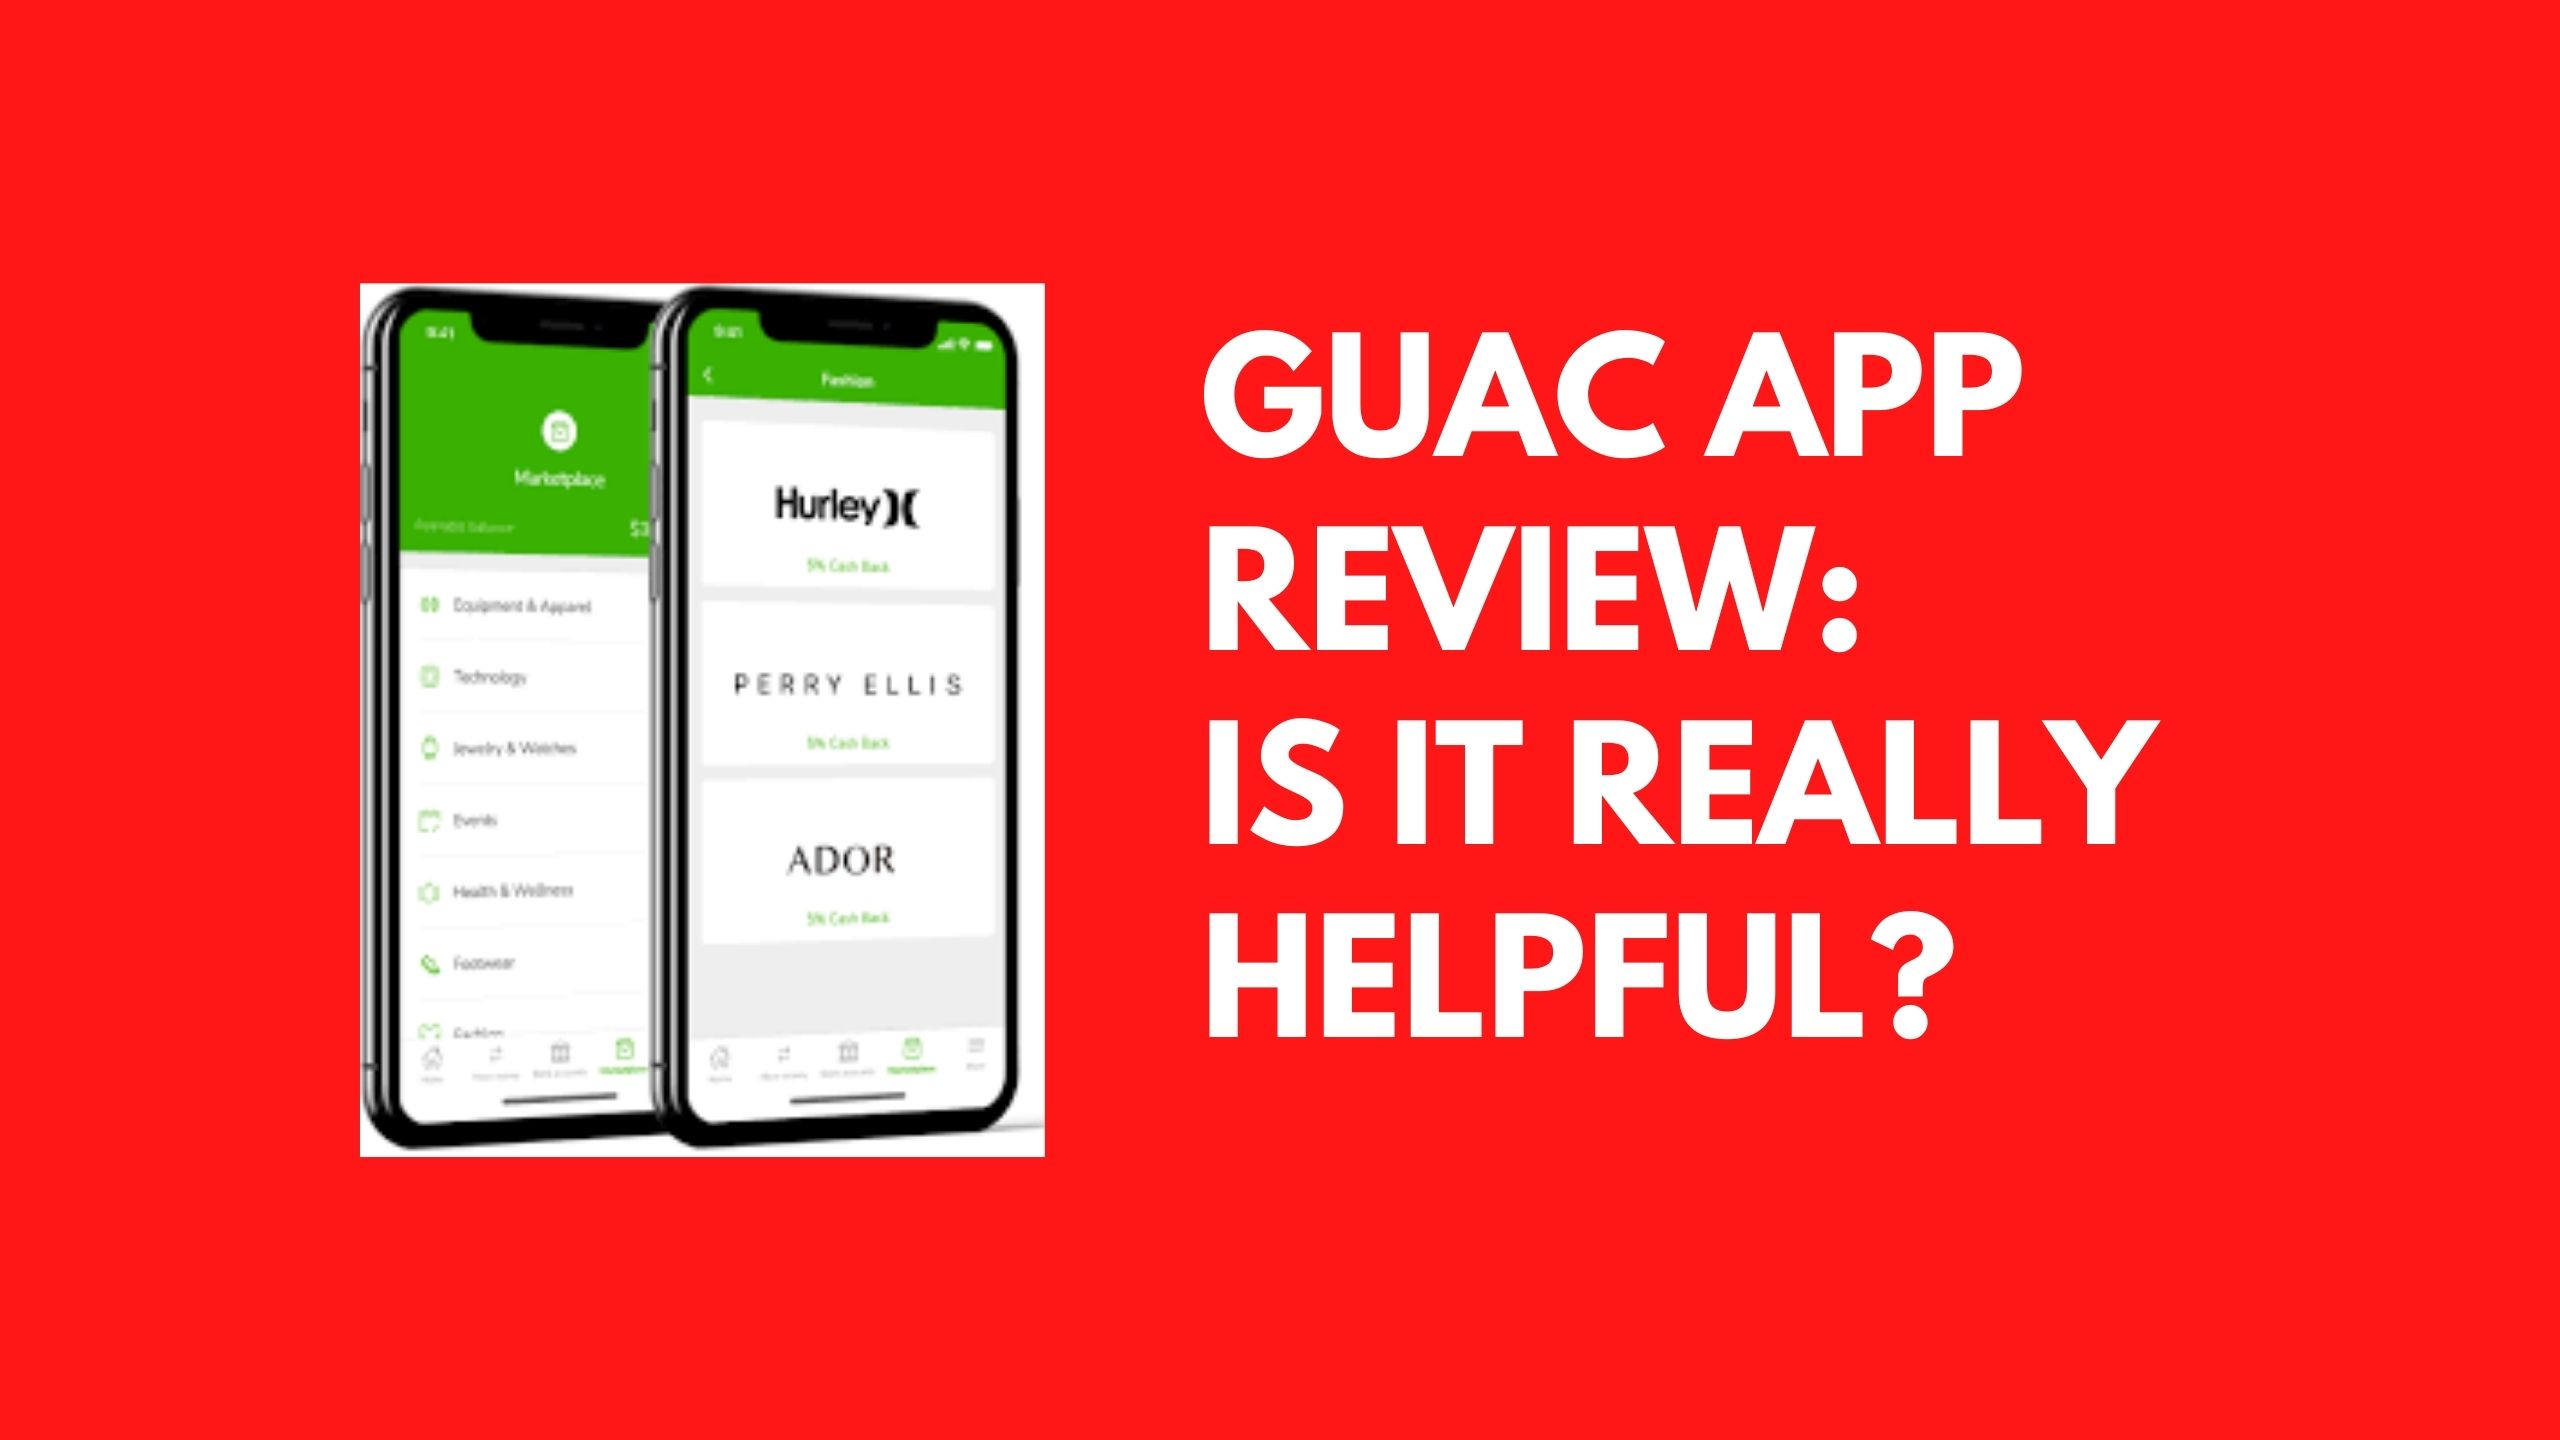 Guac App Review